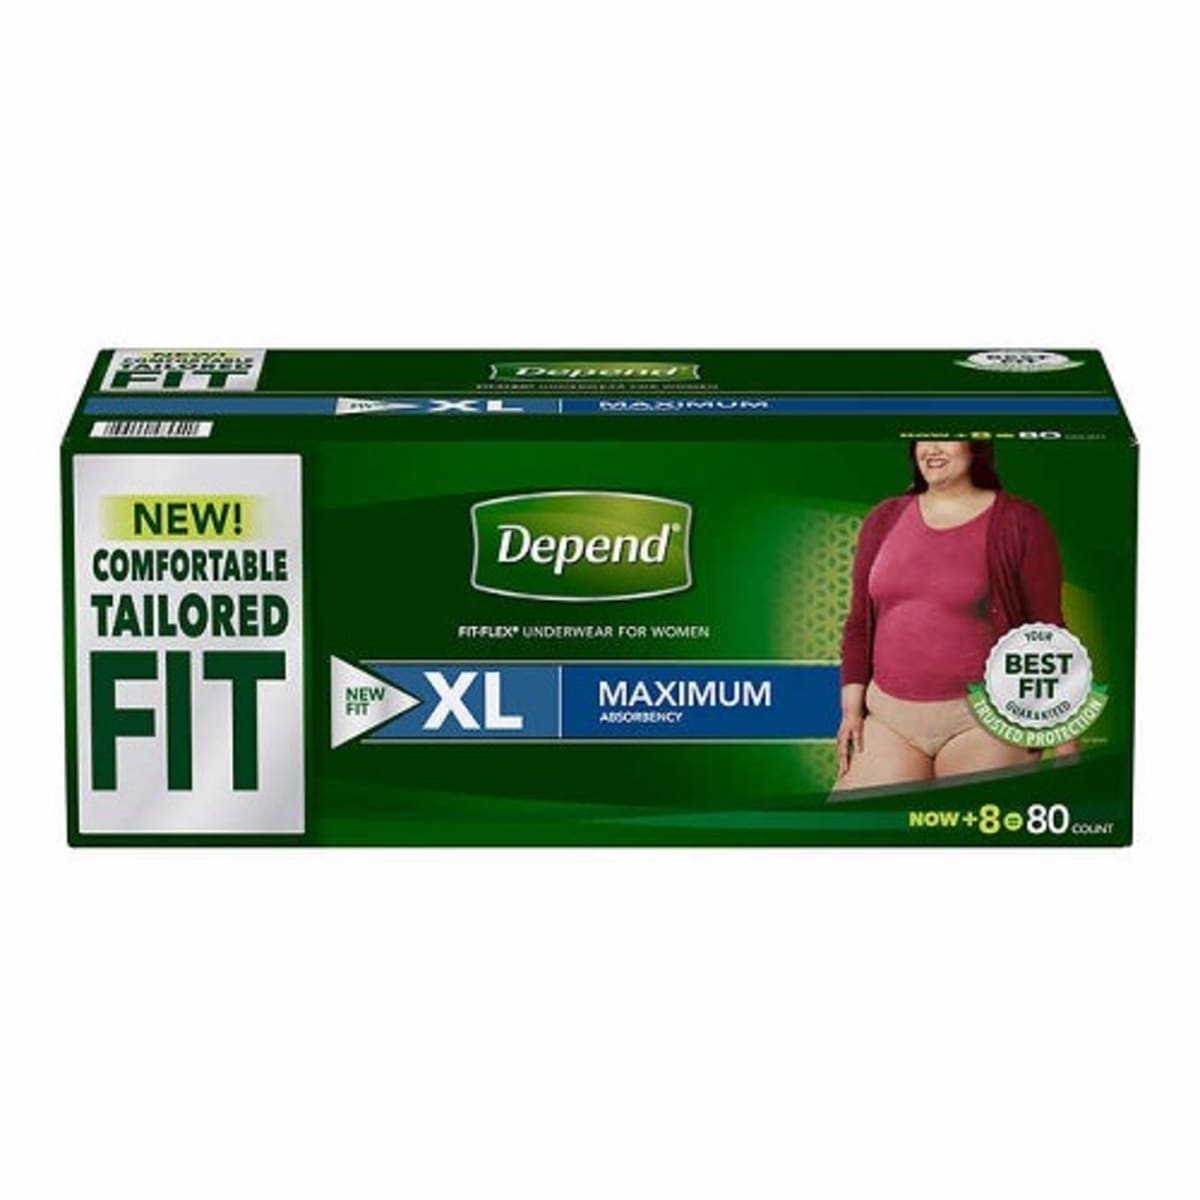 Depend Fit-flex Max Absorbency Underwear/Adult Diaper For Women - 80ct - XL